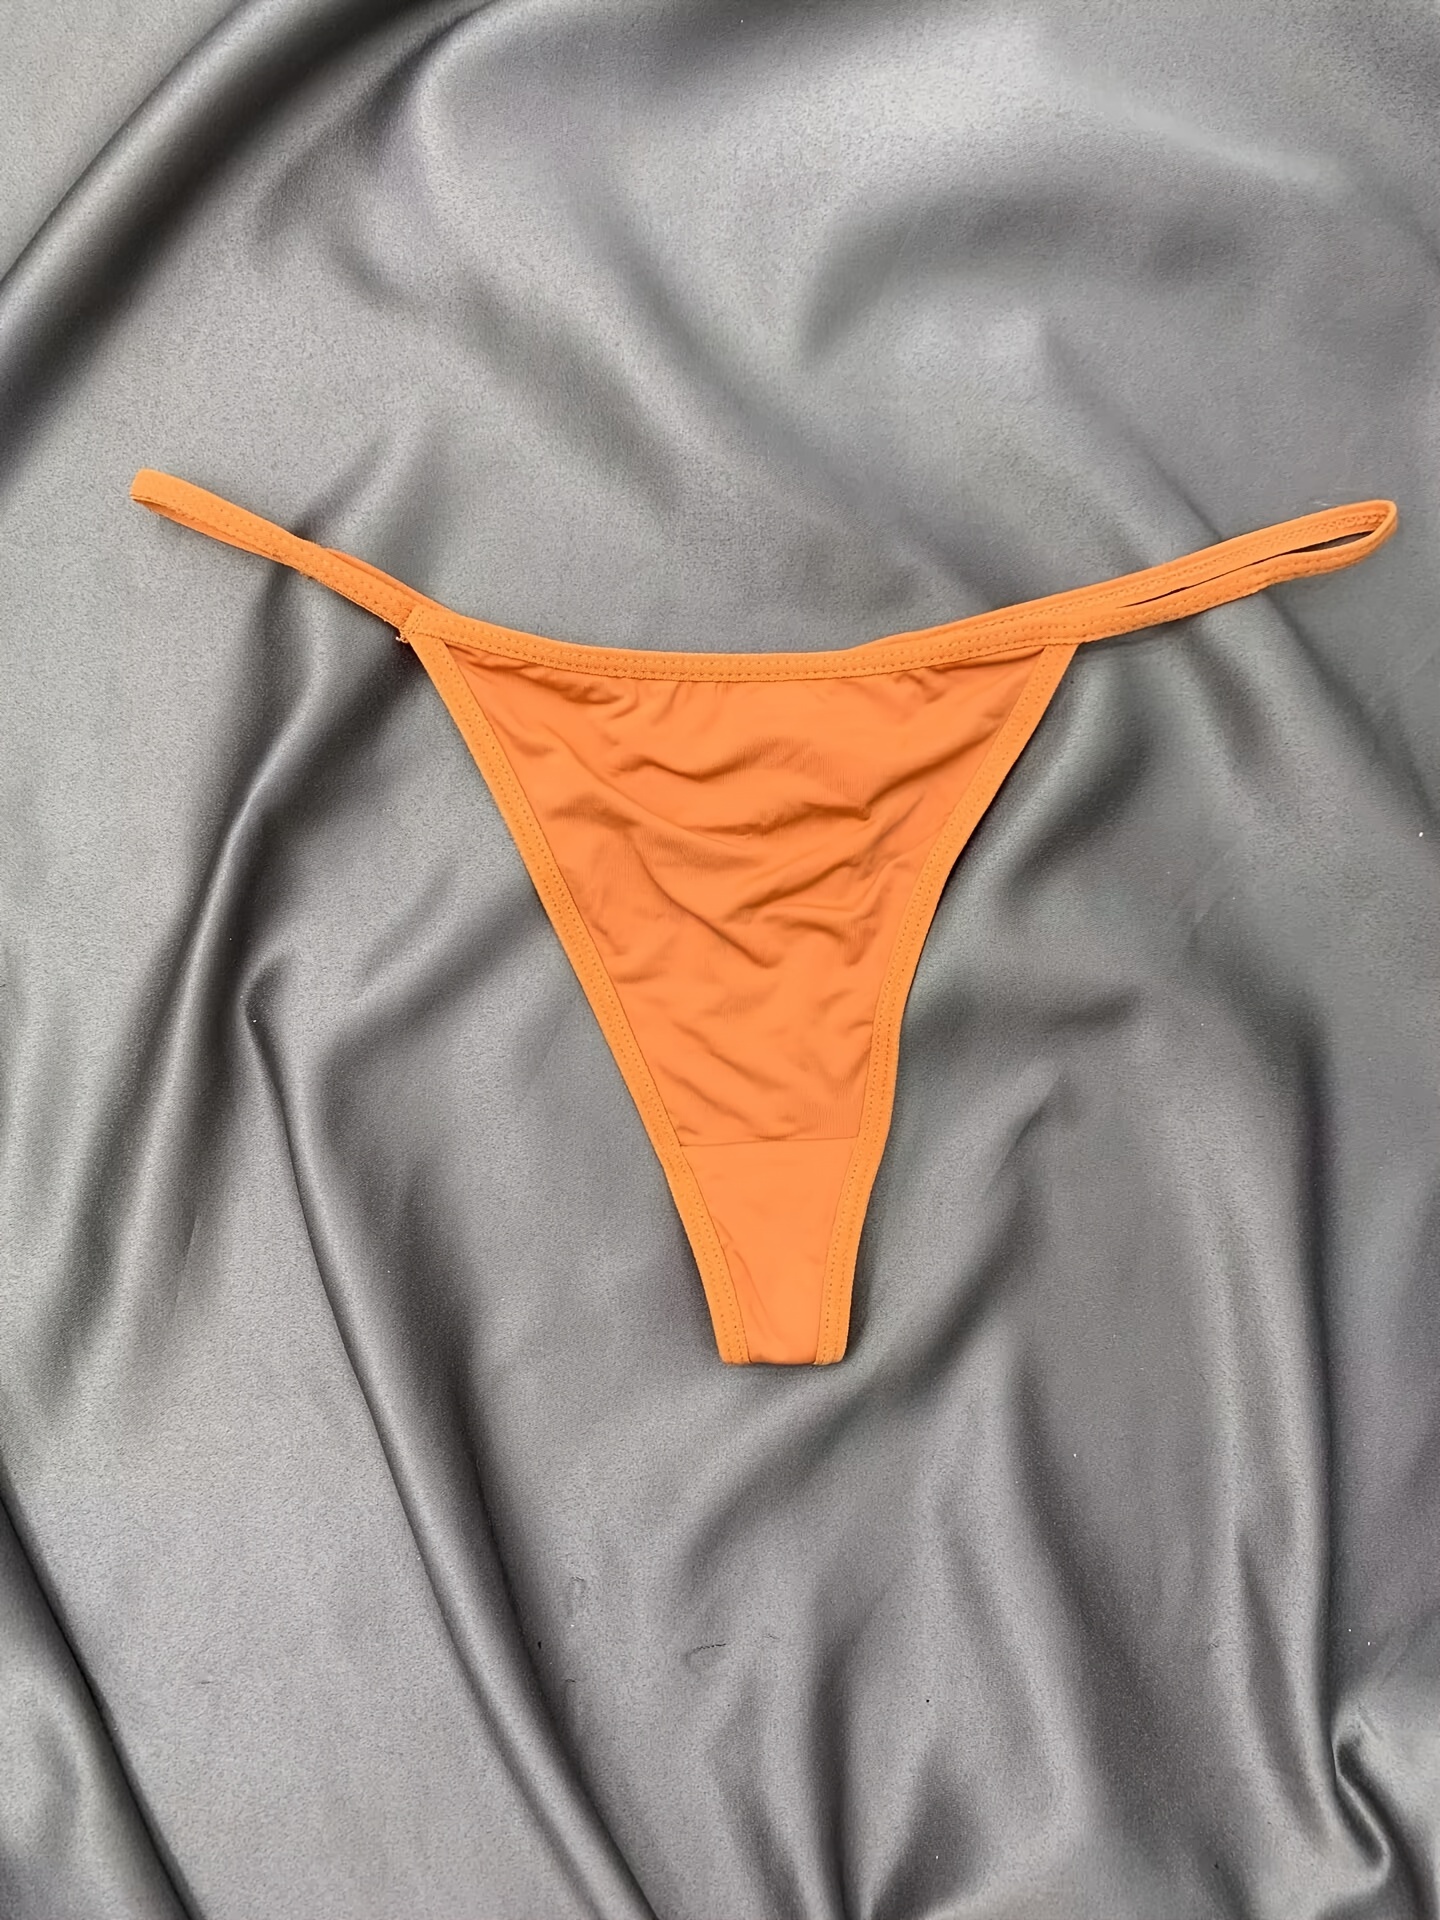 Women's Panties Thong Women Underwear Lingerie Sexy G Strings